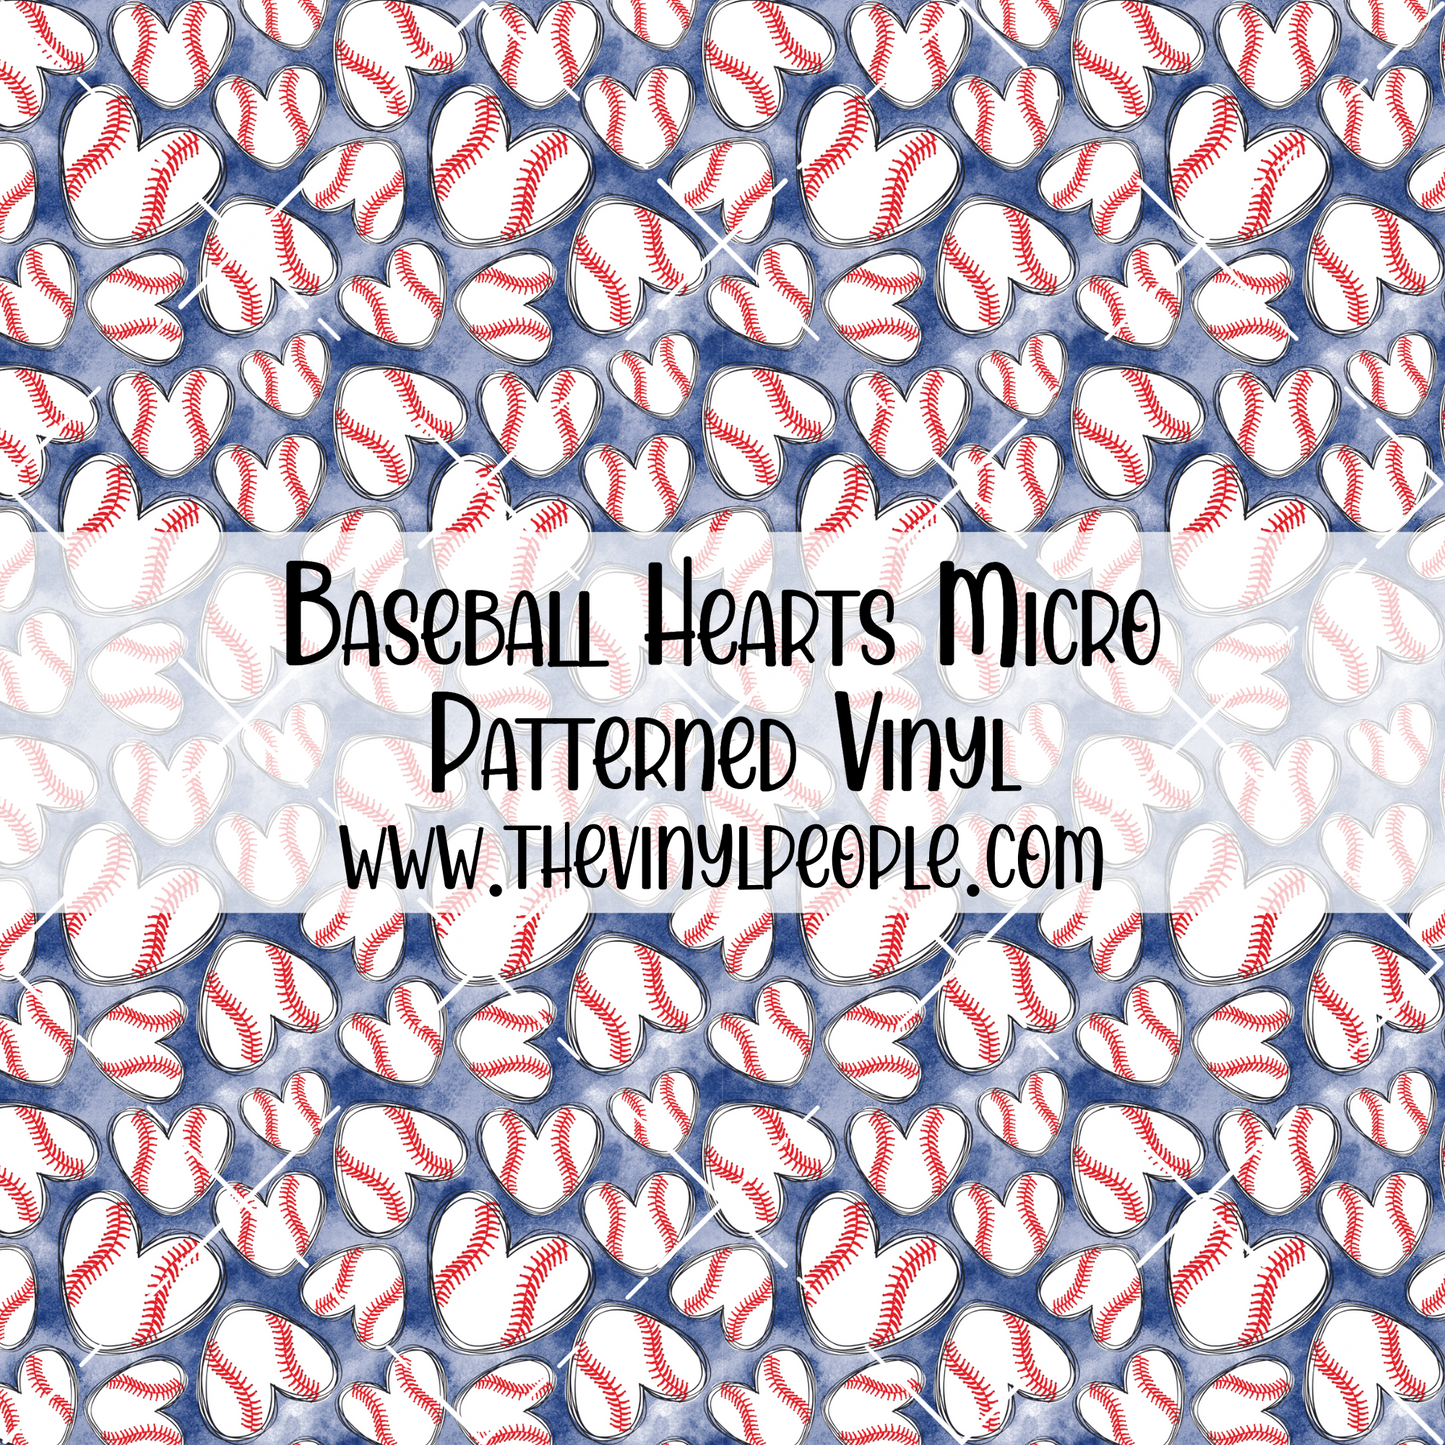 Baseball Hearts Patterned Vinyl